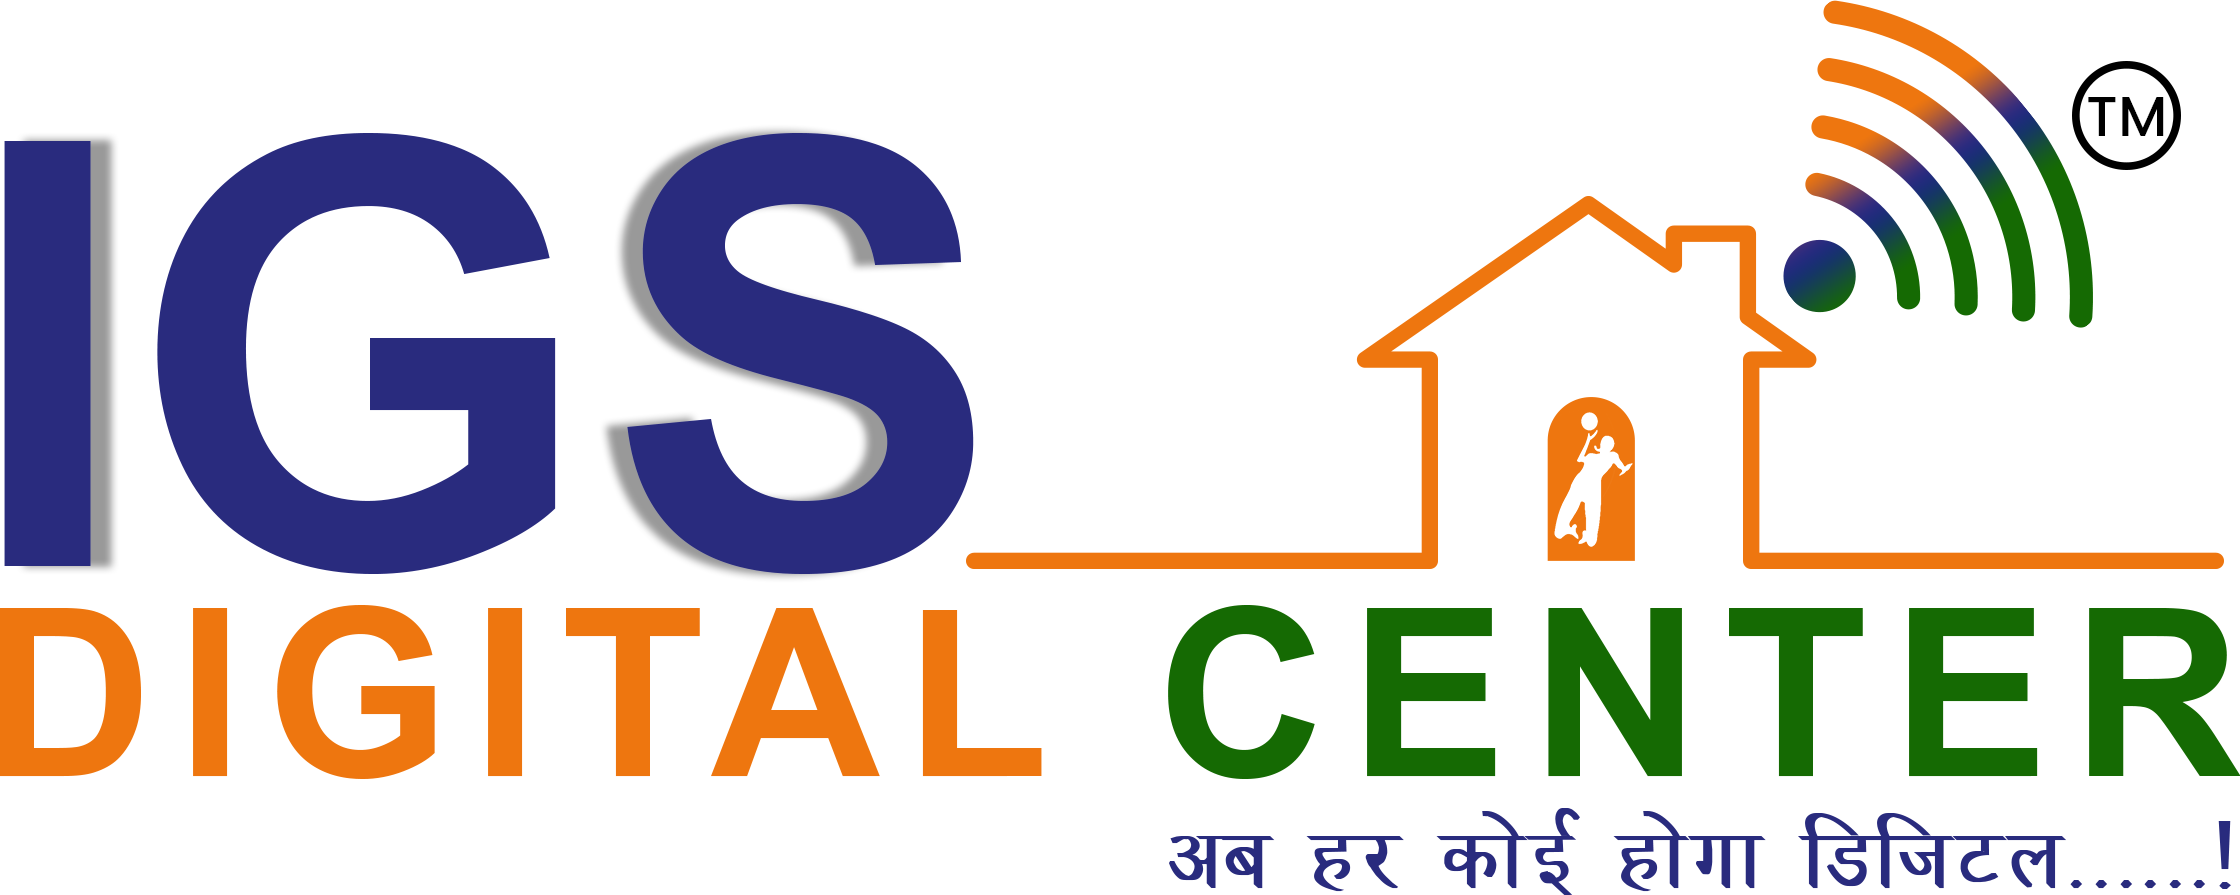 IGS Digital Center Limited